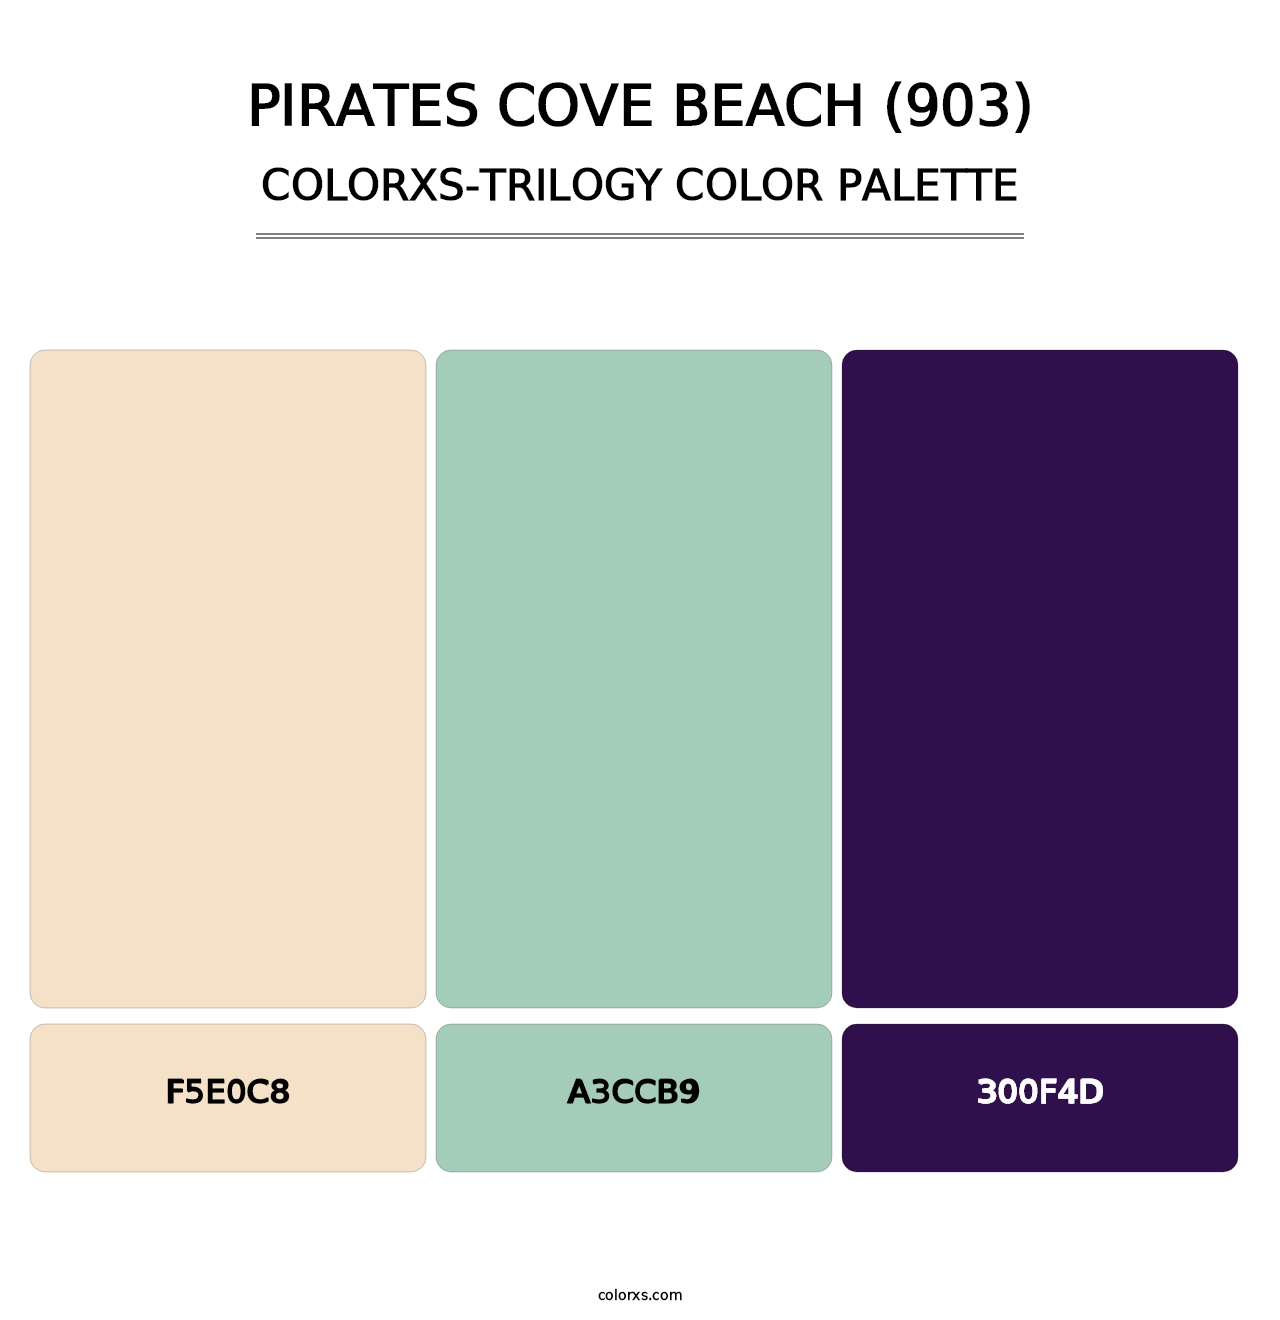 Pirates Cove Beach (903) - Colorxs Trilogy Palette